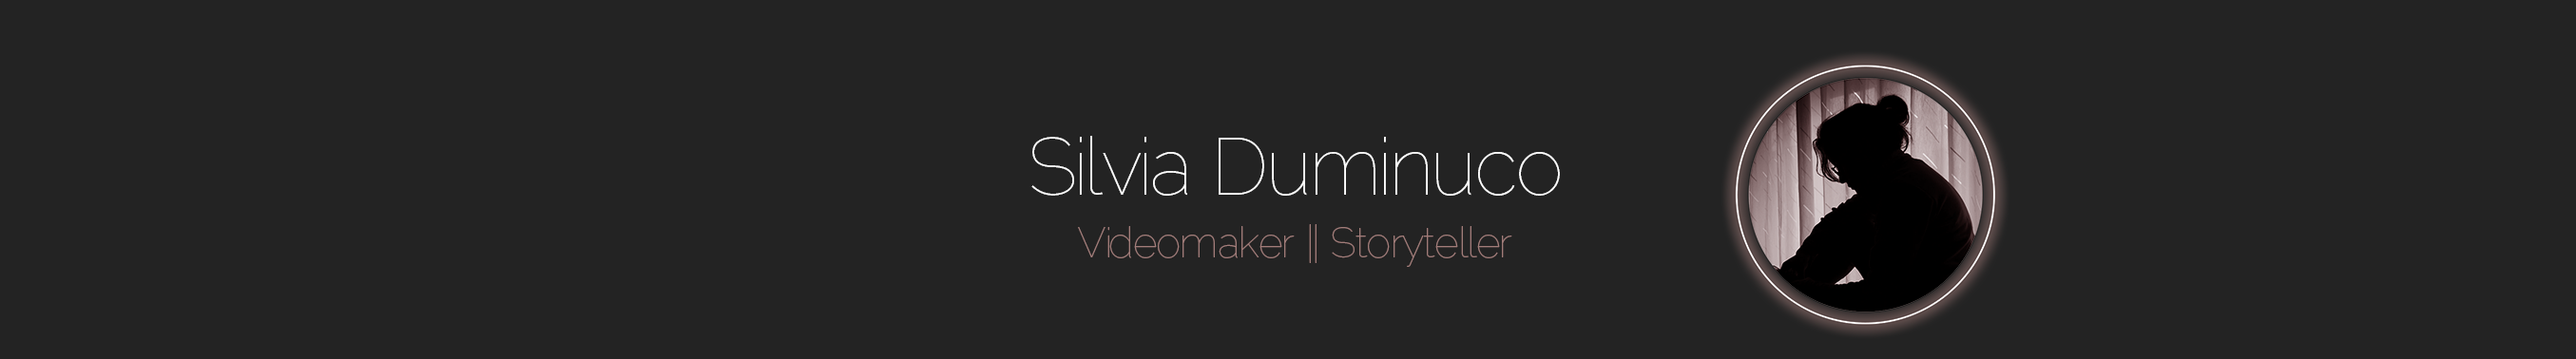 Silvia Duminuco's profile banner